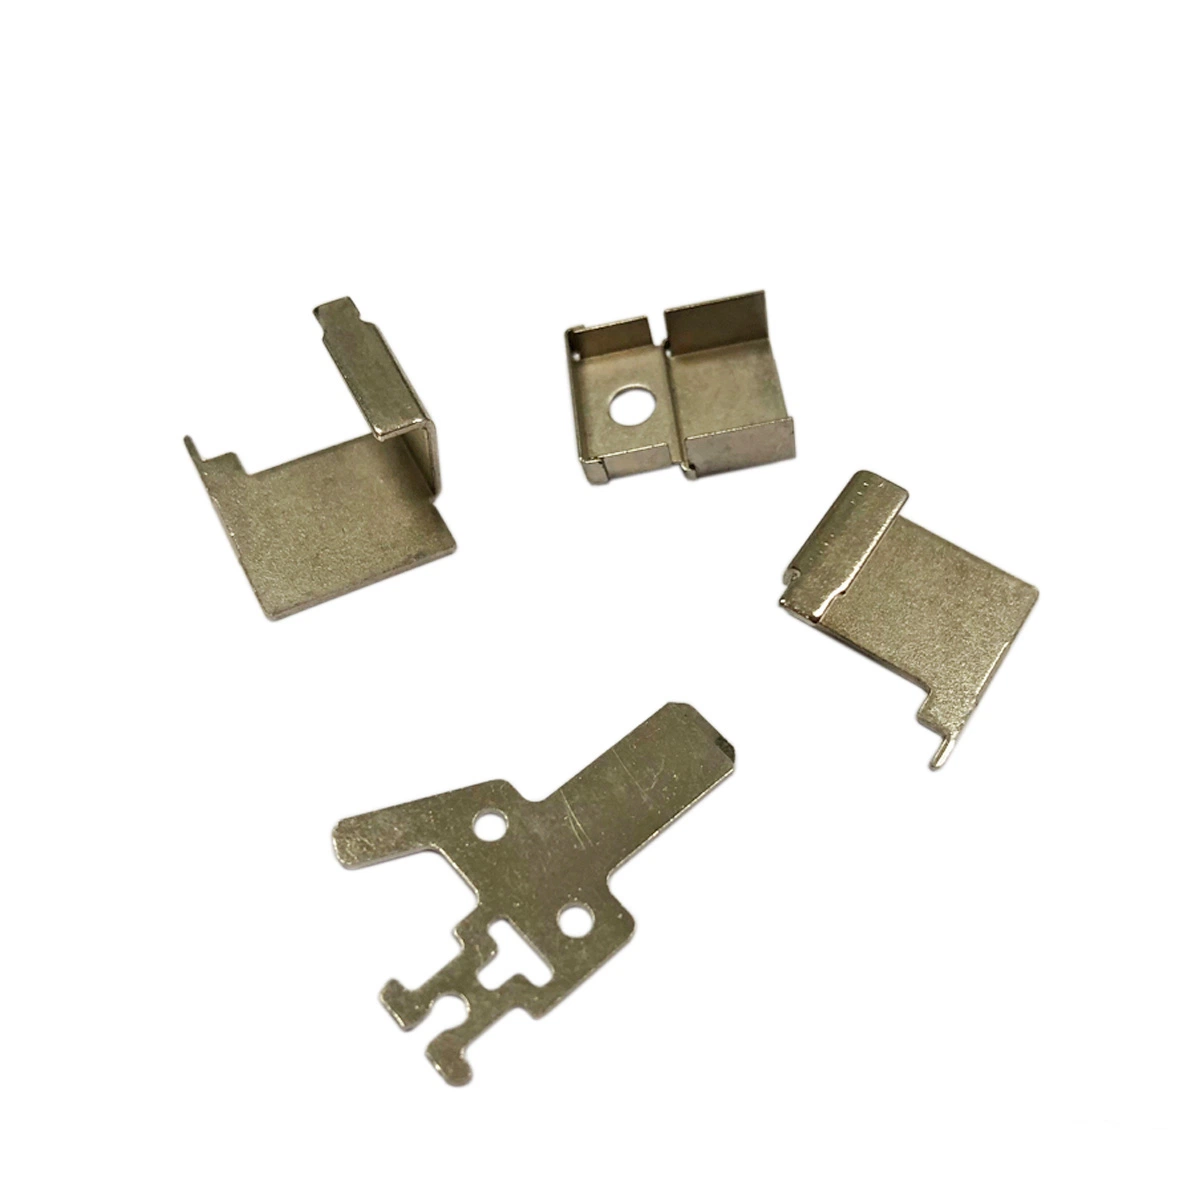 Fpic Metal Stamping Sheet Metal Parts Automotive Connector Vehicle Part Meta Fabrication Metal Stamping Part